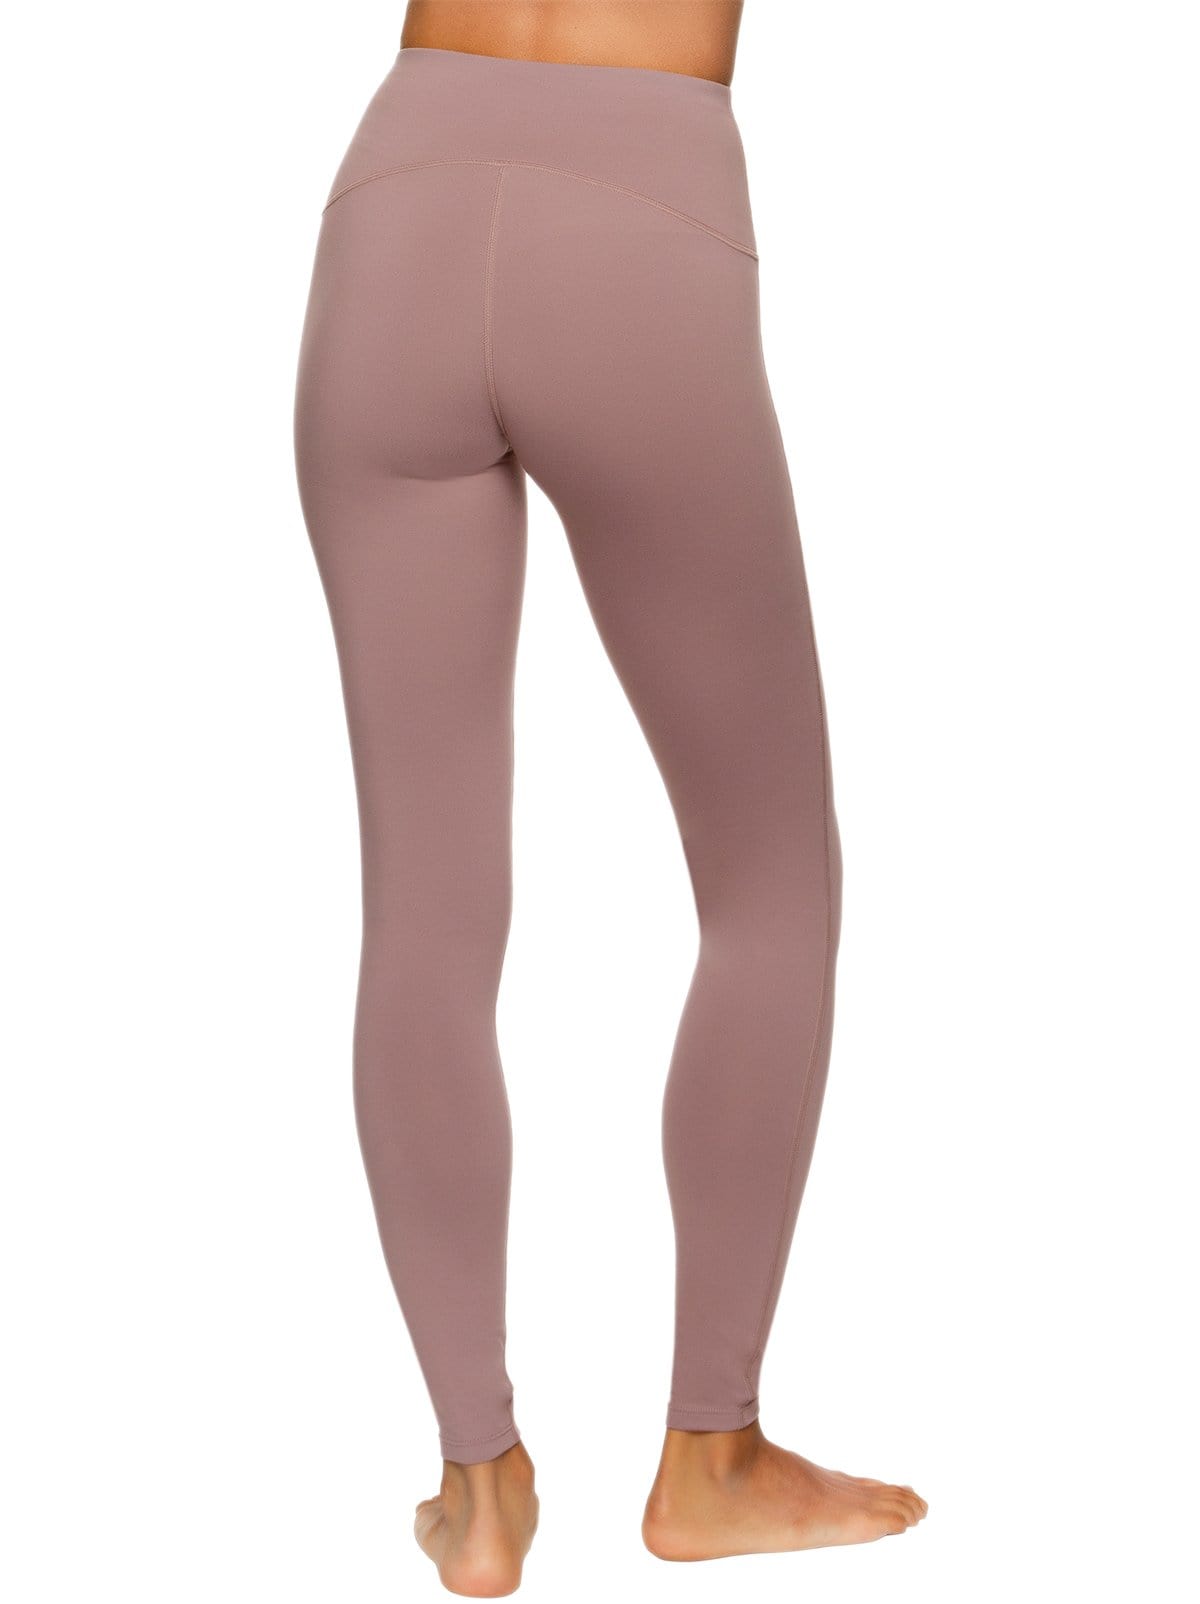 Cotton Modal Lightweight Leggings 2-Pack  Pants for women, Felina,  Intimates apparel